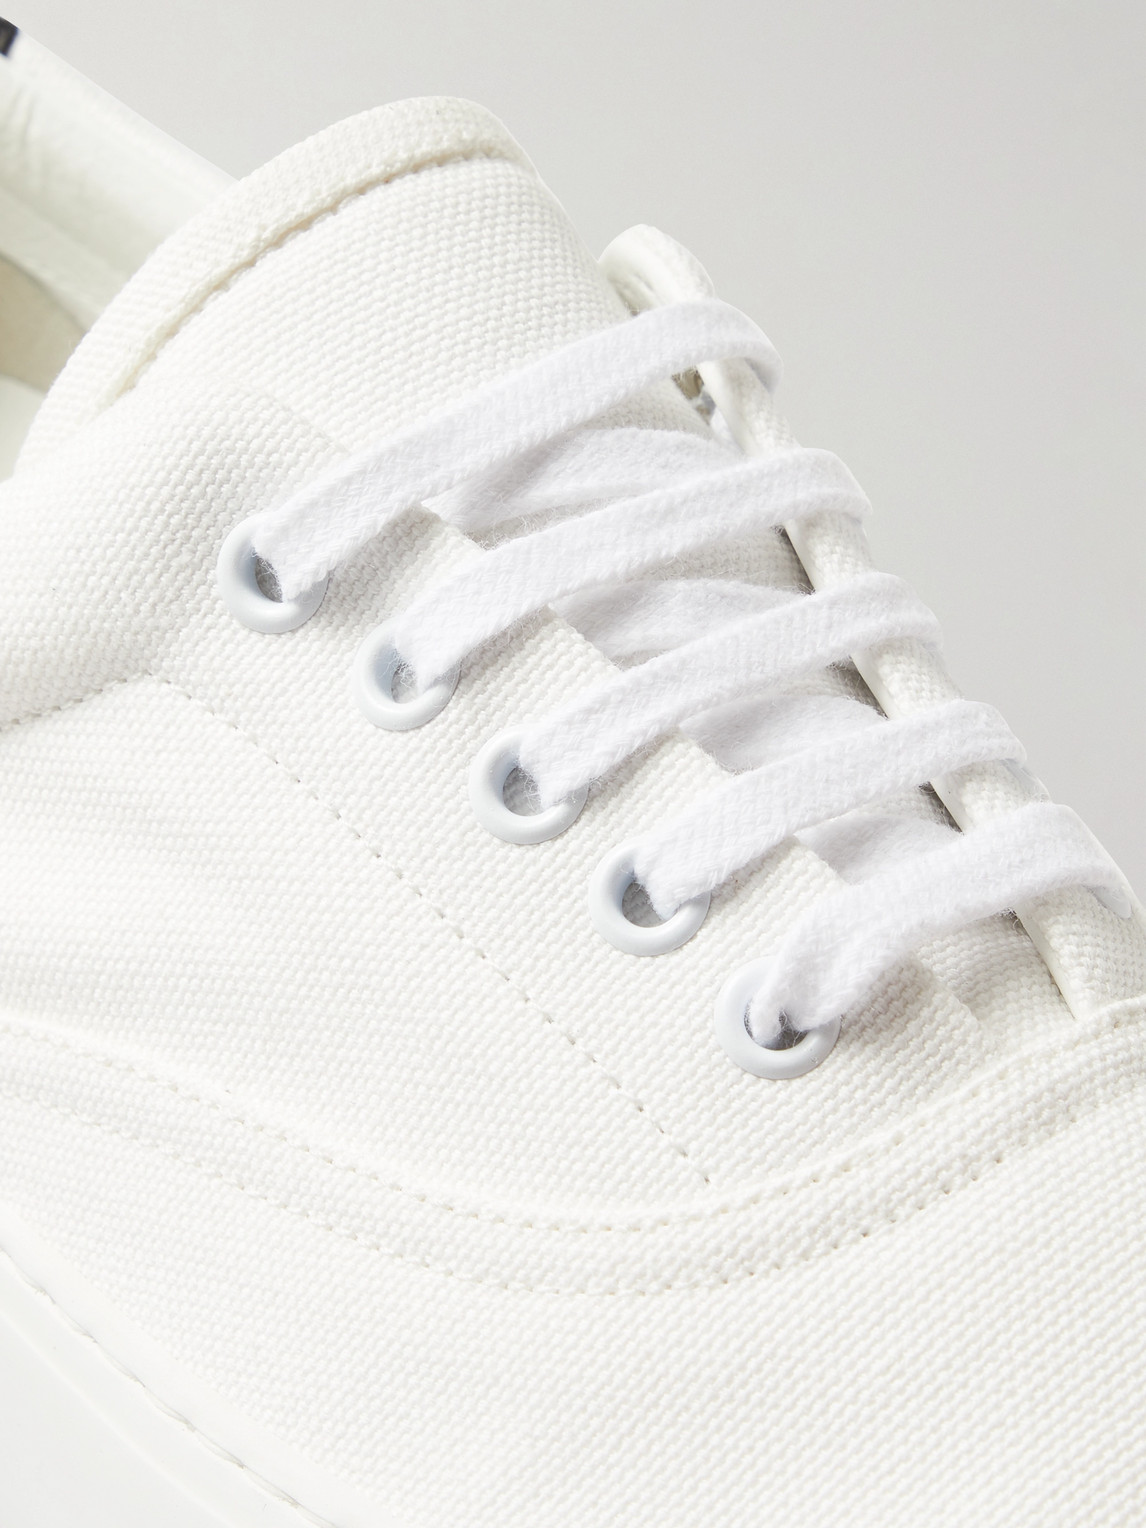 Shop Saint Laurent Venice Leather-trimmed Cotton-canvas Sneakers In White